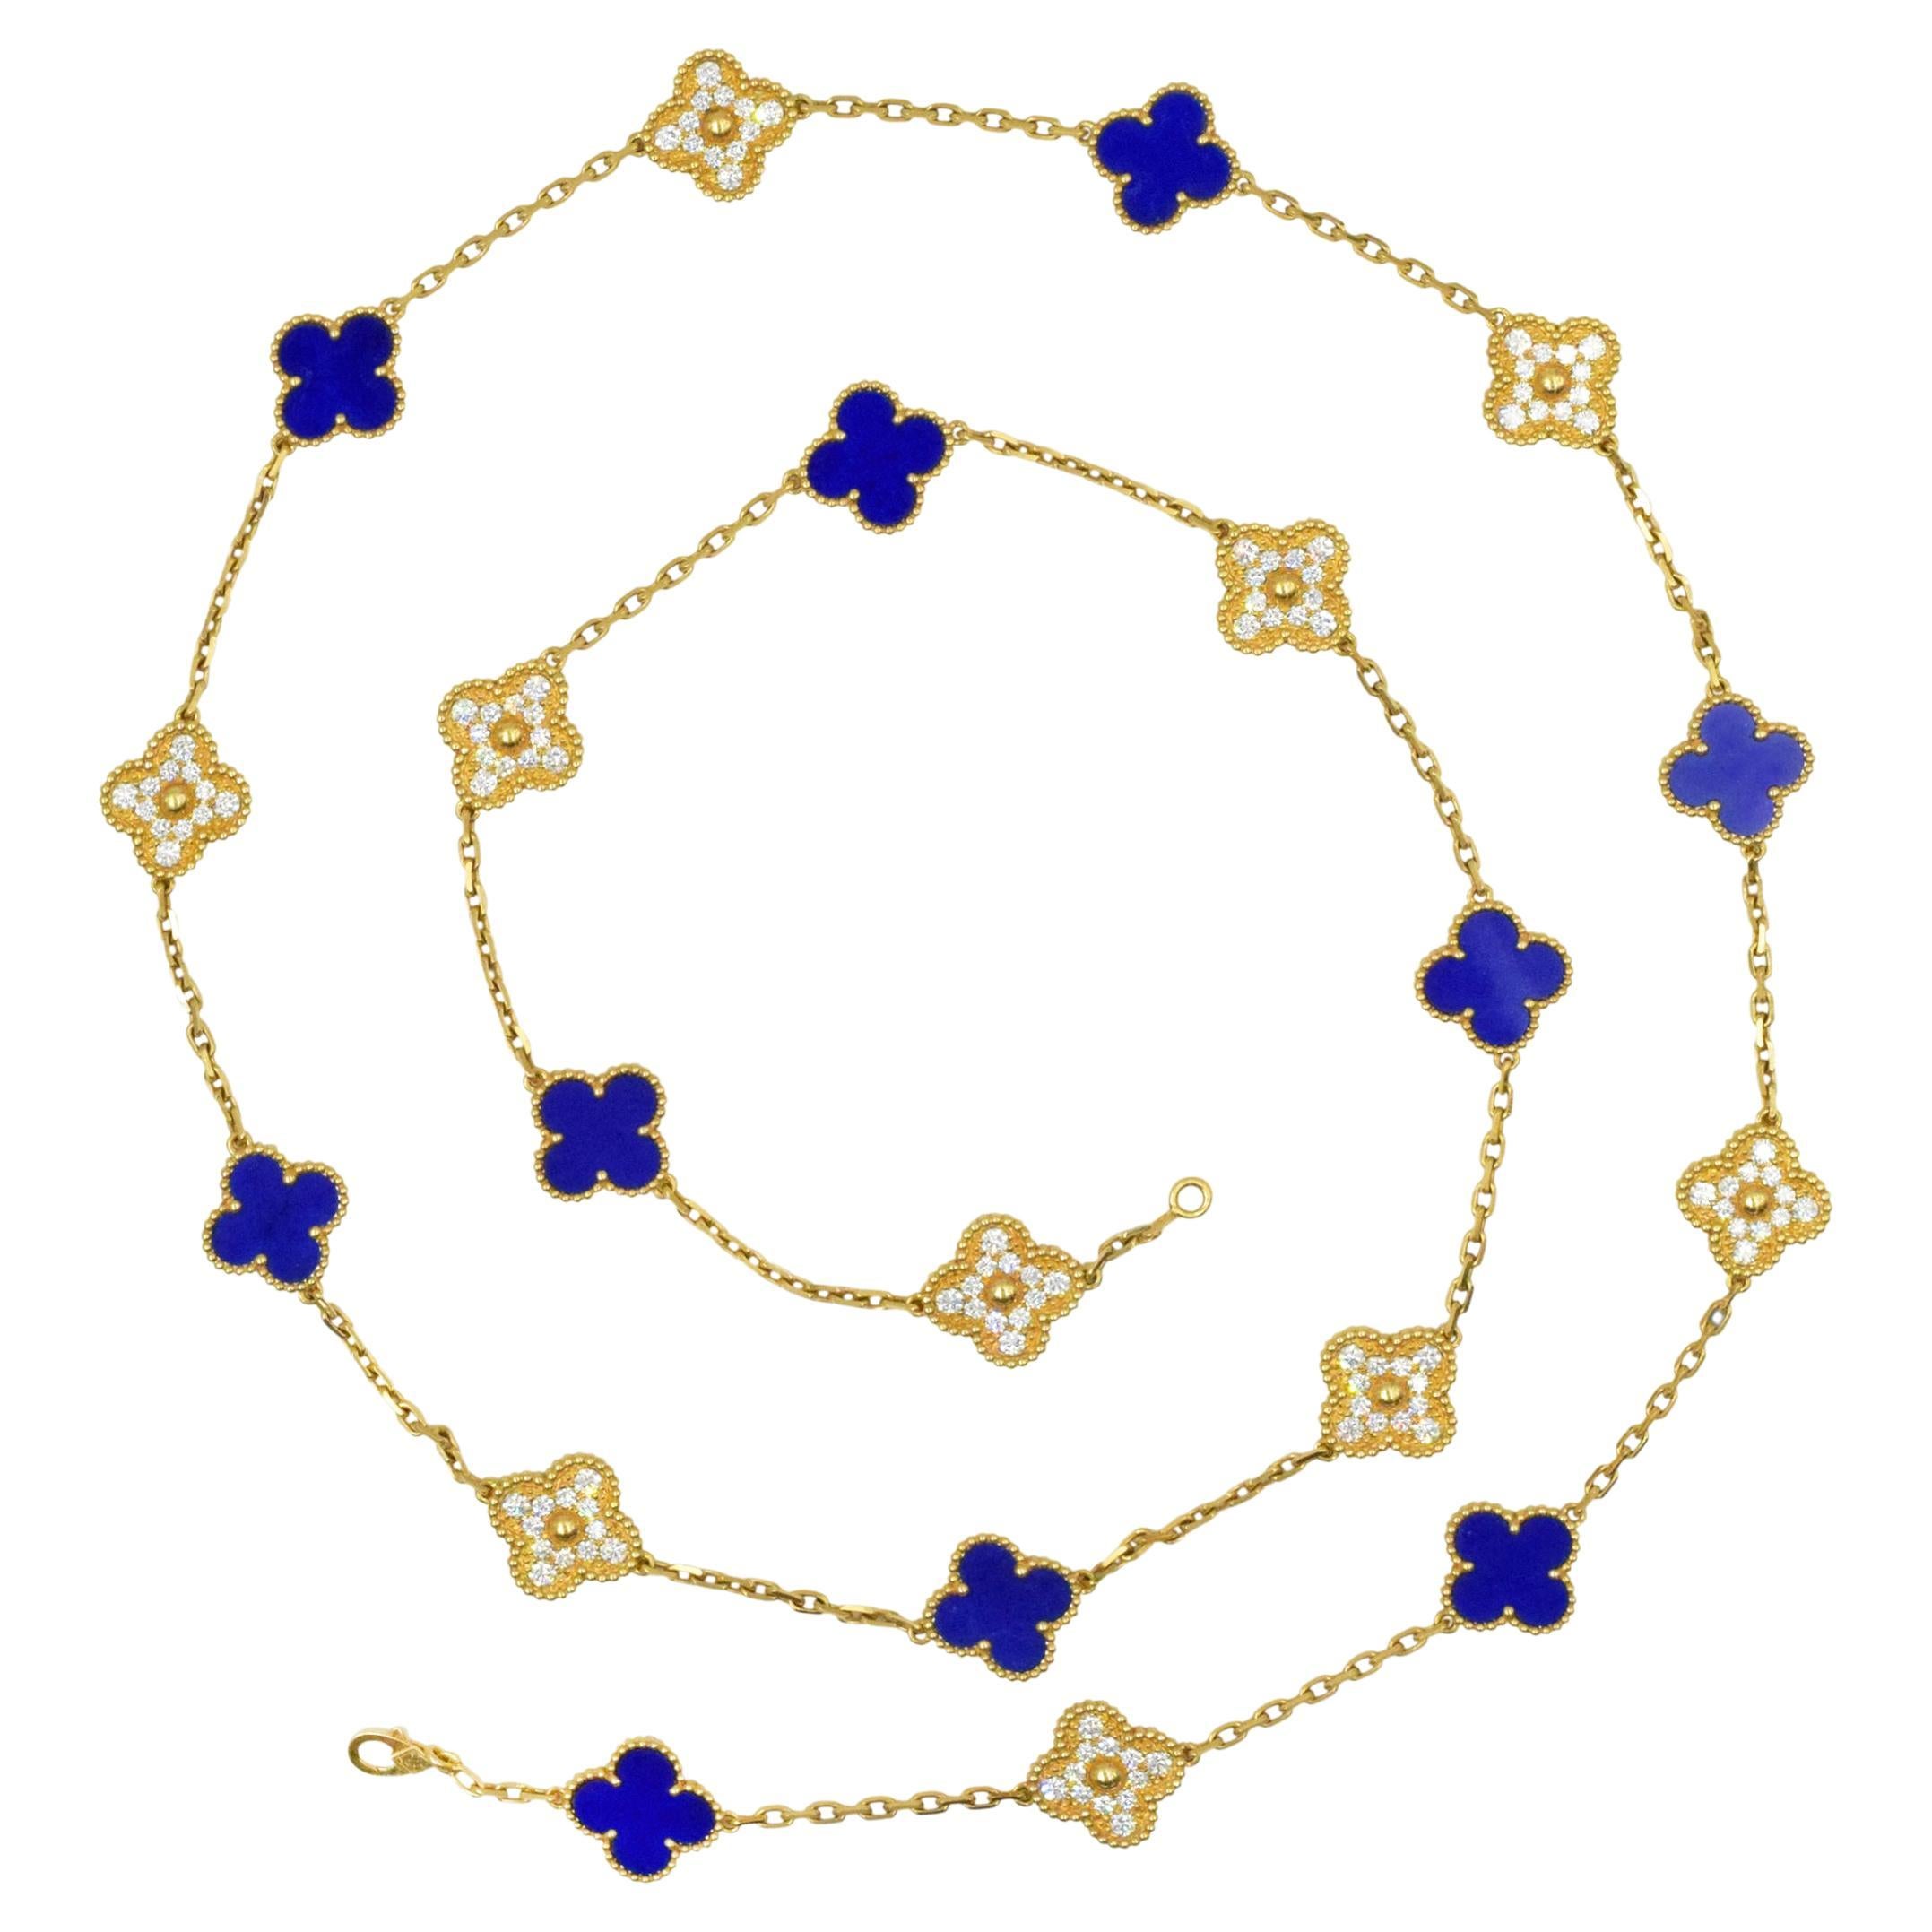 Van Cleef & Arpels Diamond and Lapis Lazuli Alhambra Necklace 